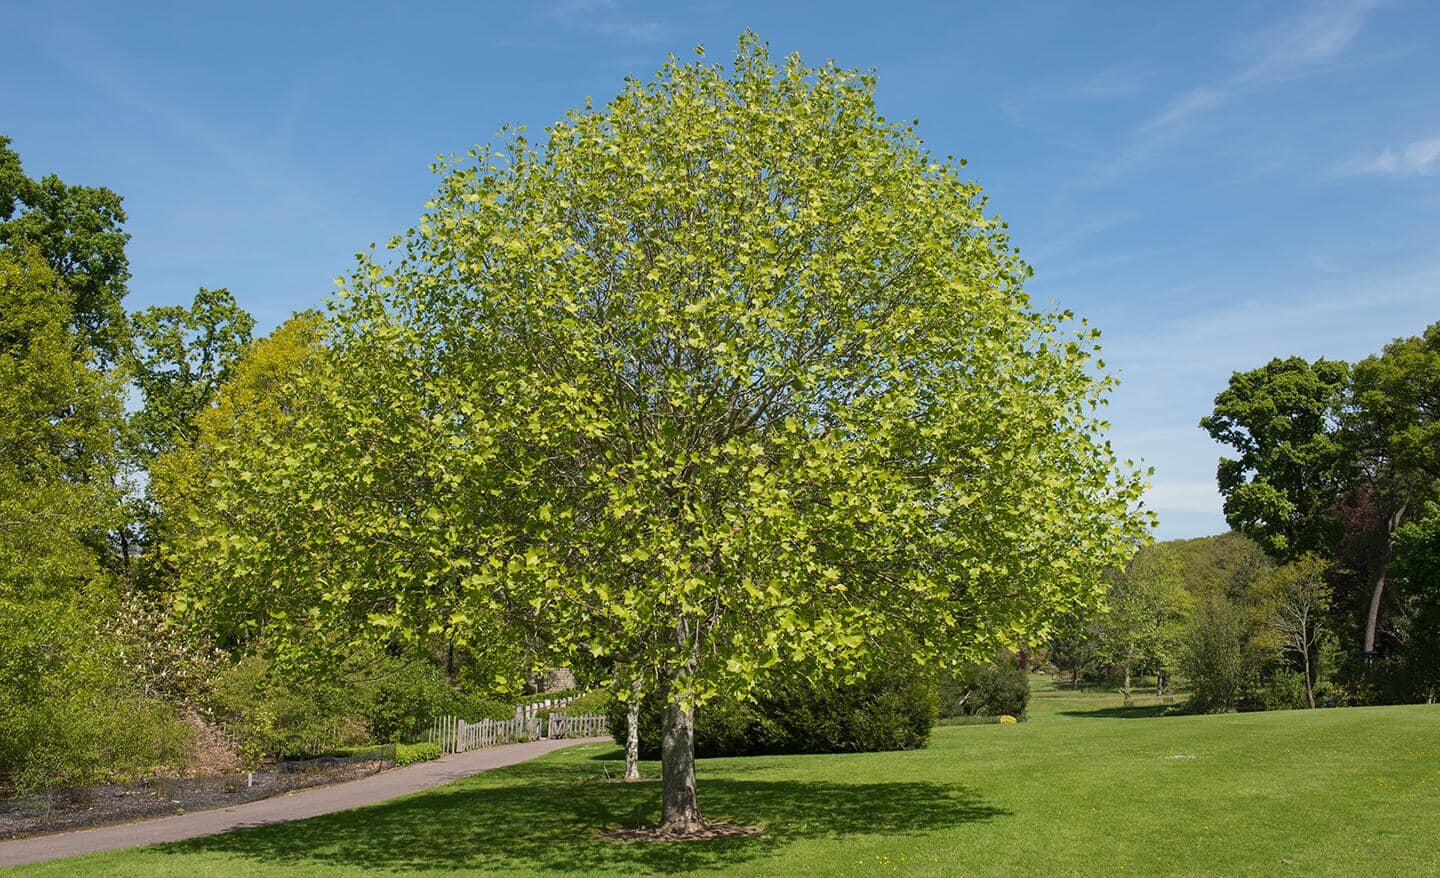 A large poplar tree in a yard